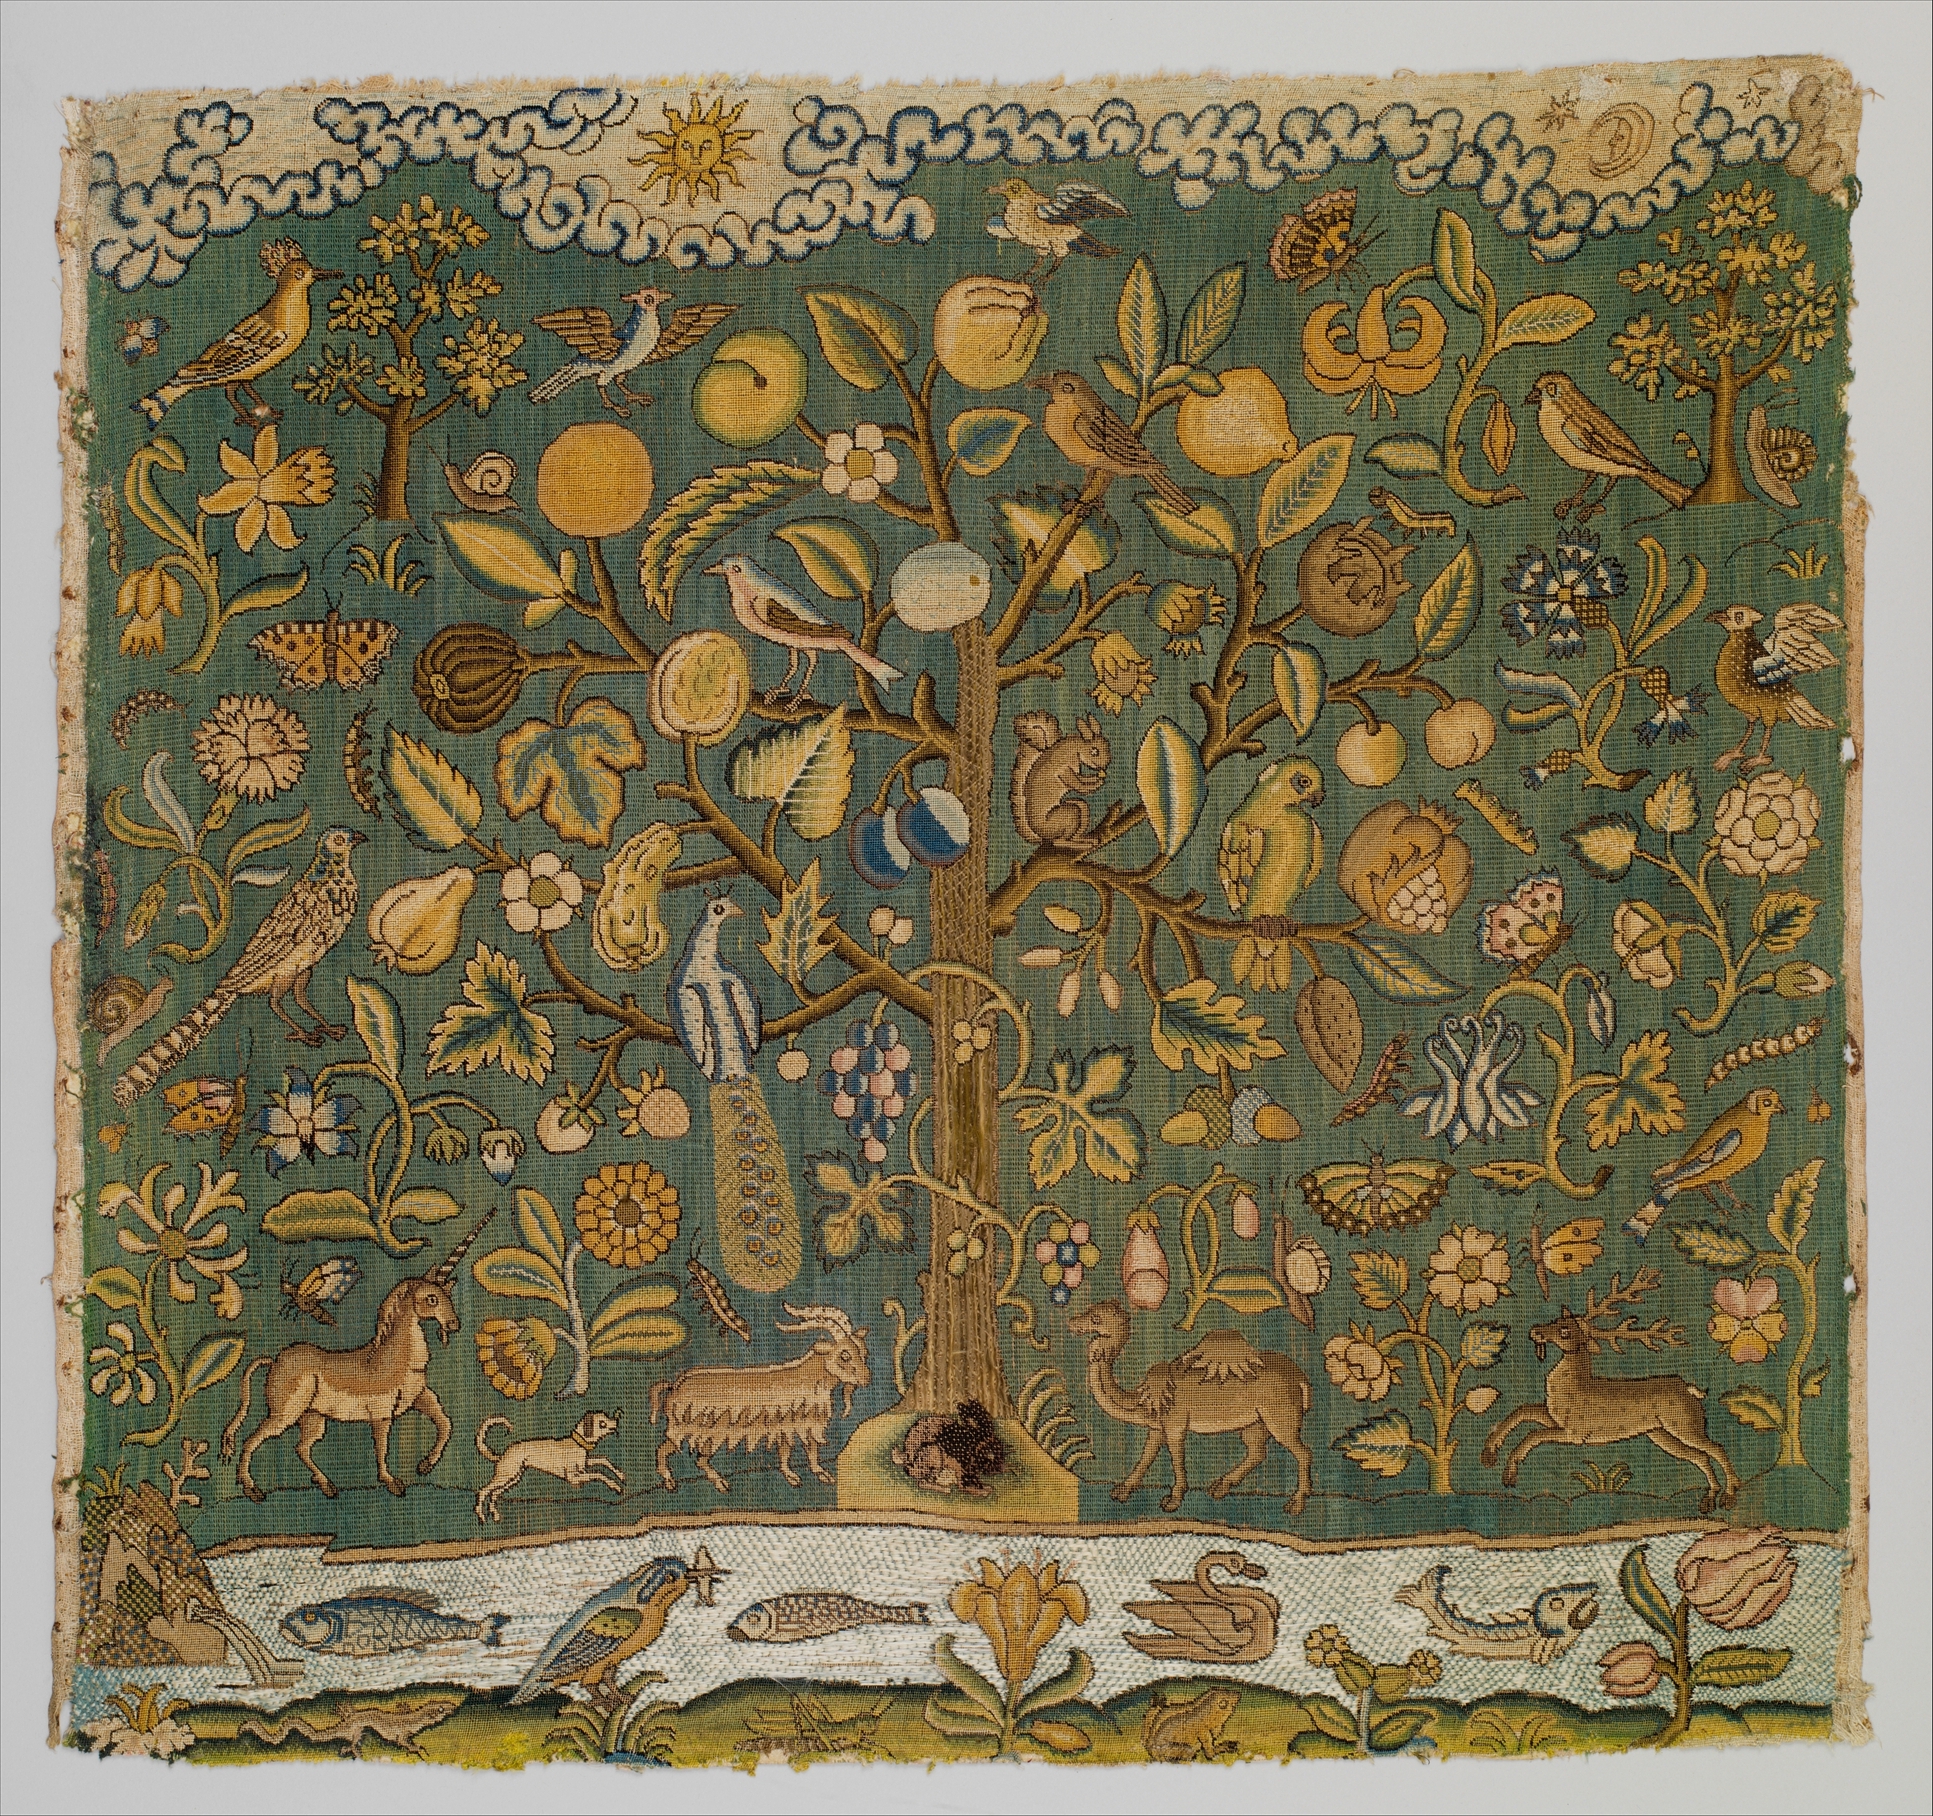 tree of life paintings on canvas